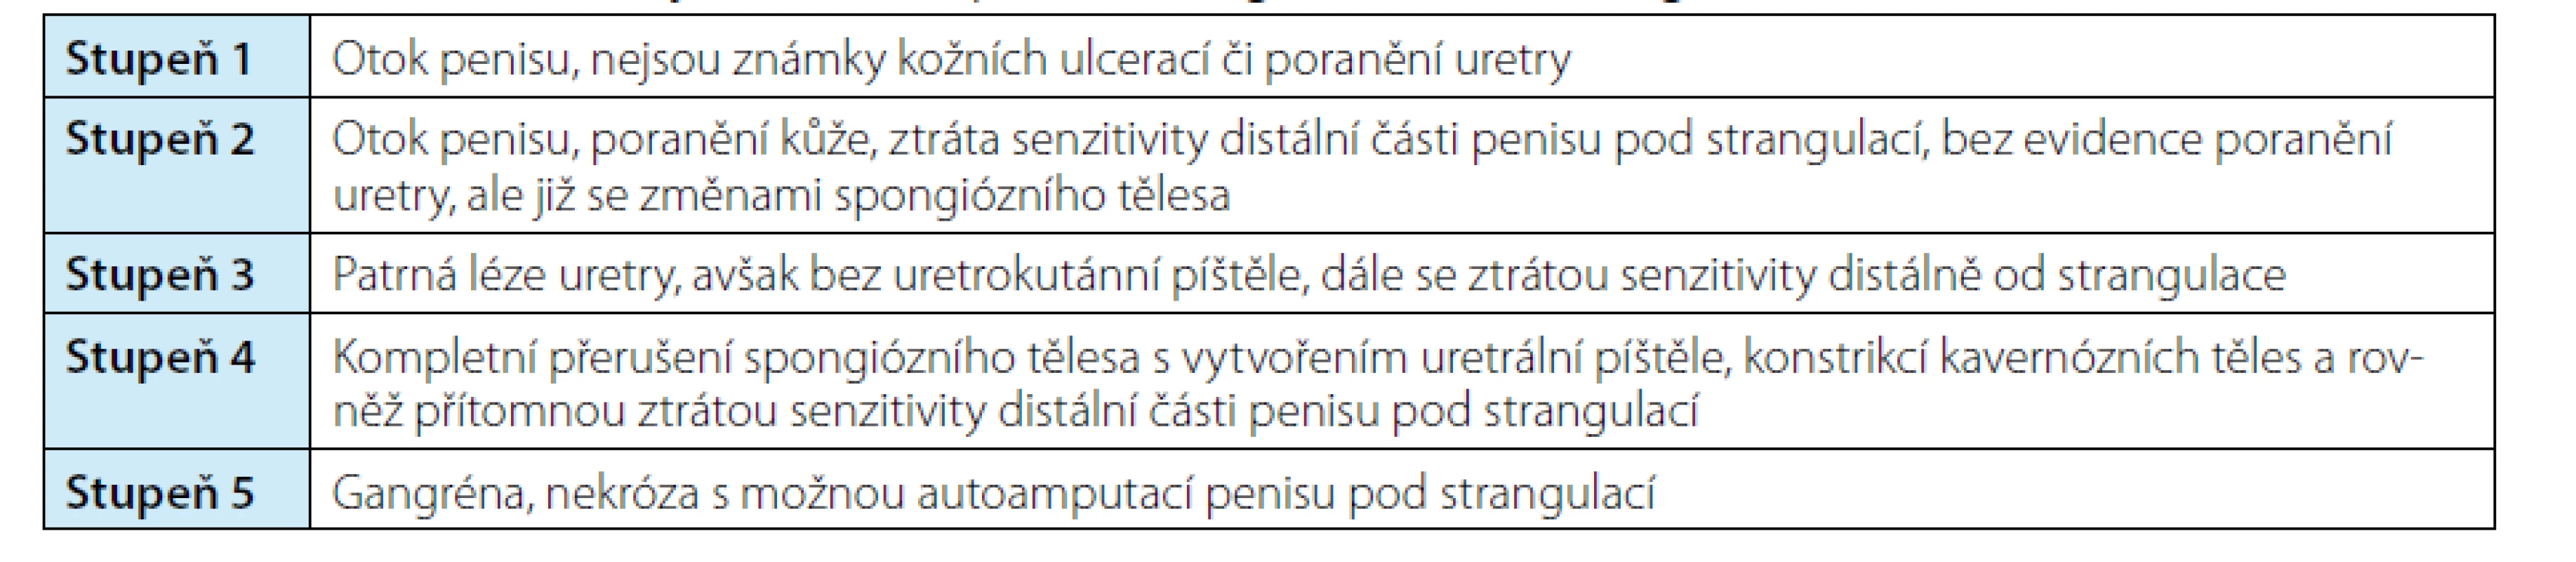 Klasifikace poranění v důsledku strangulace penisu podle Bhata a kol. (13)<br>
Tab. 1. Classification of injuries due to penile strangulation according to Bhat et al.